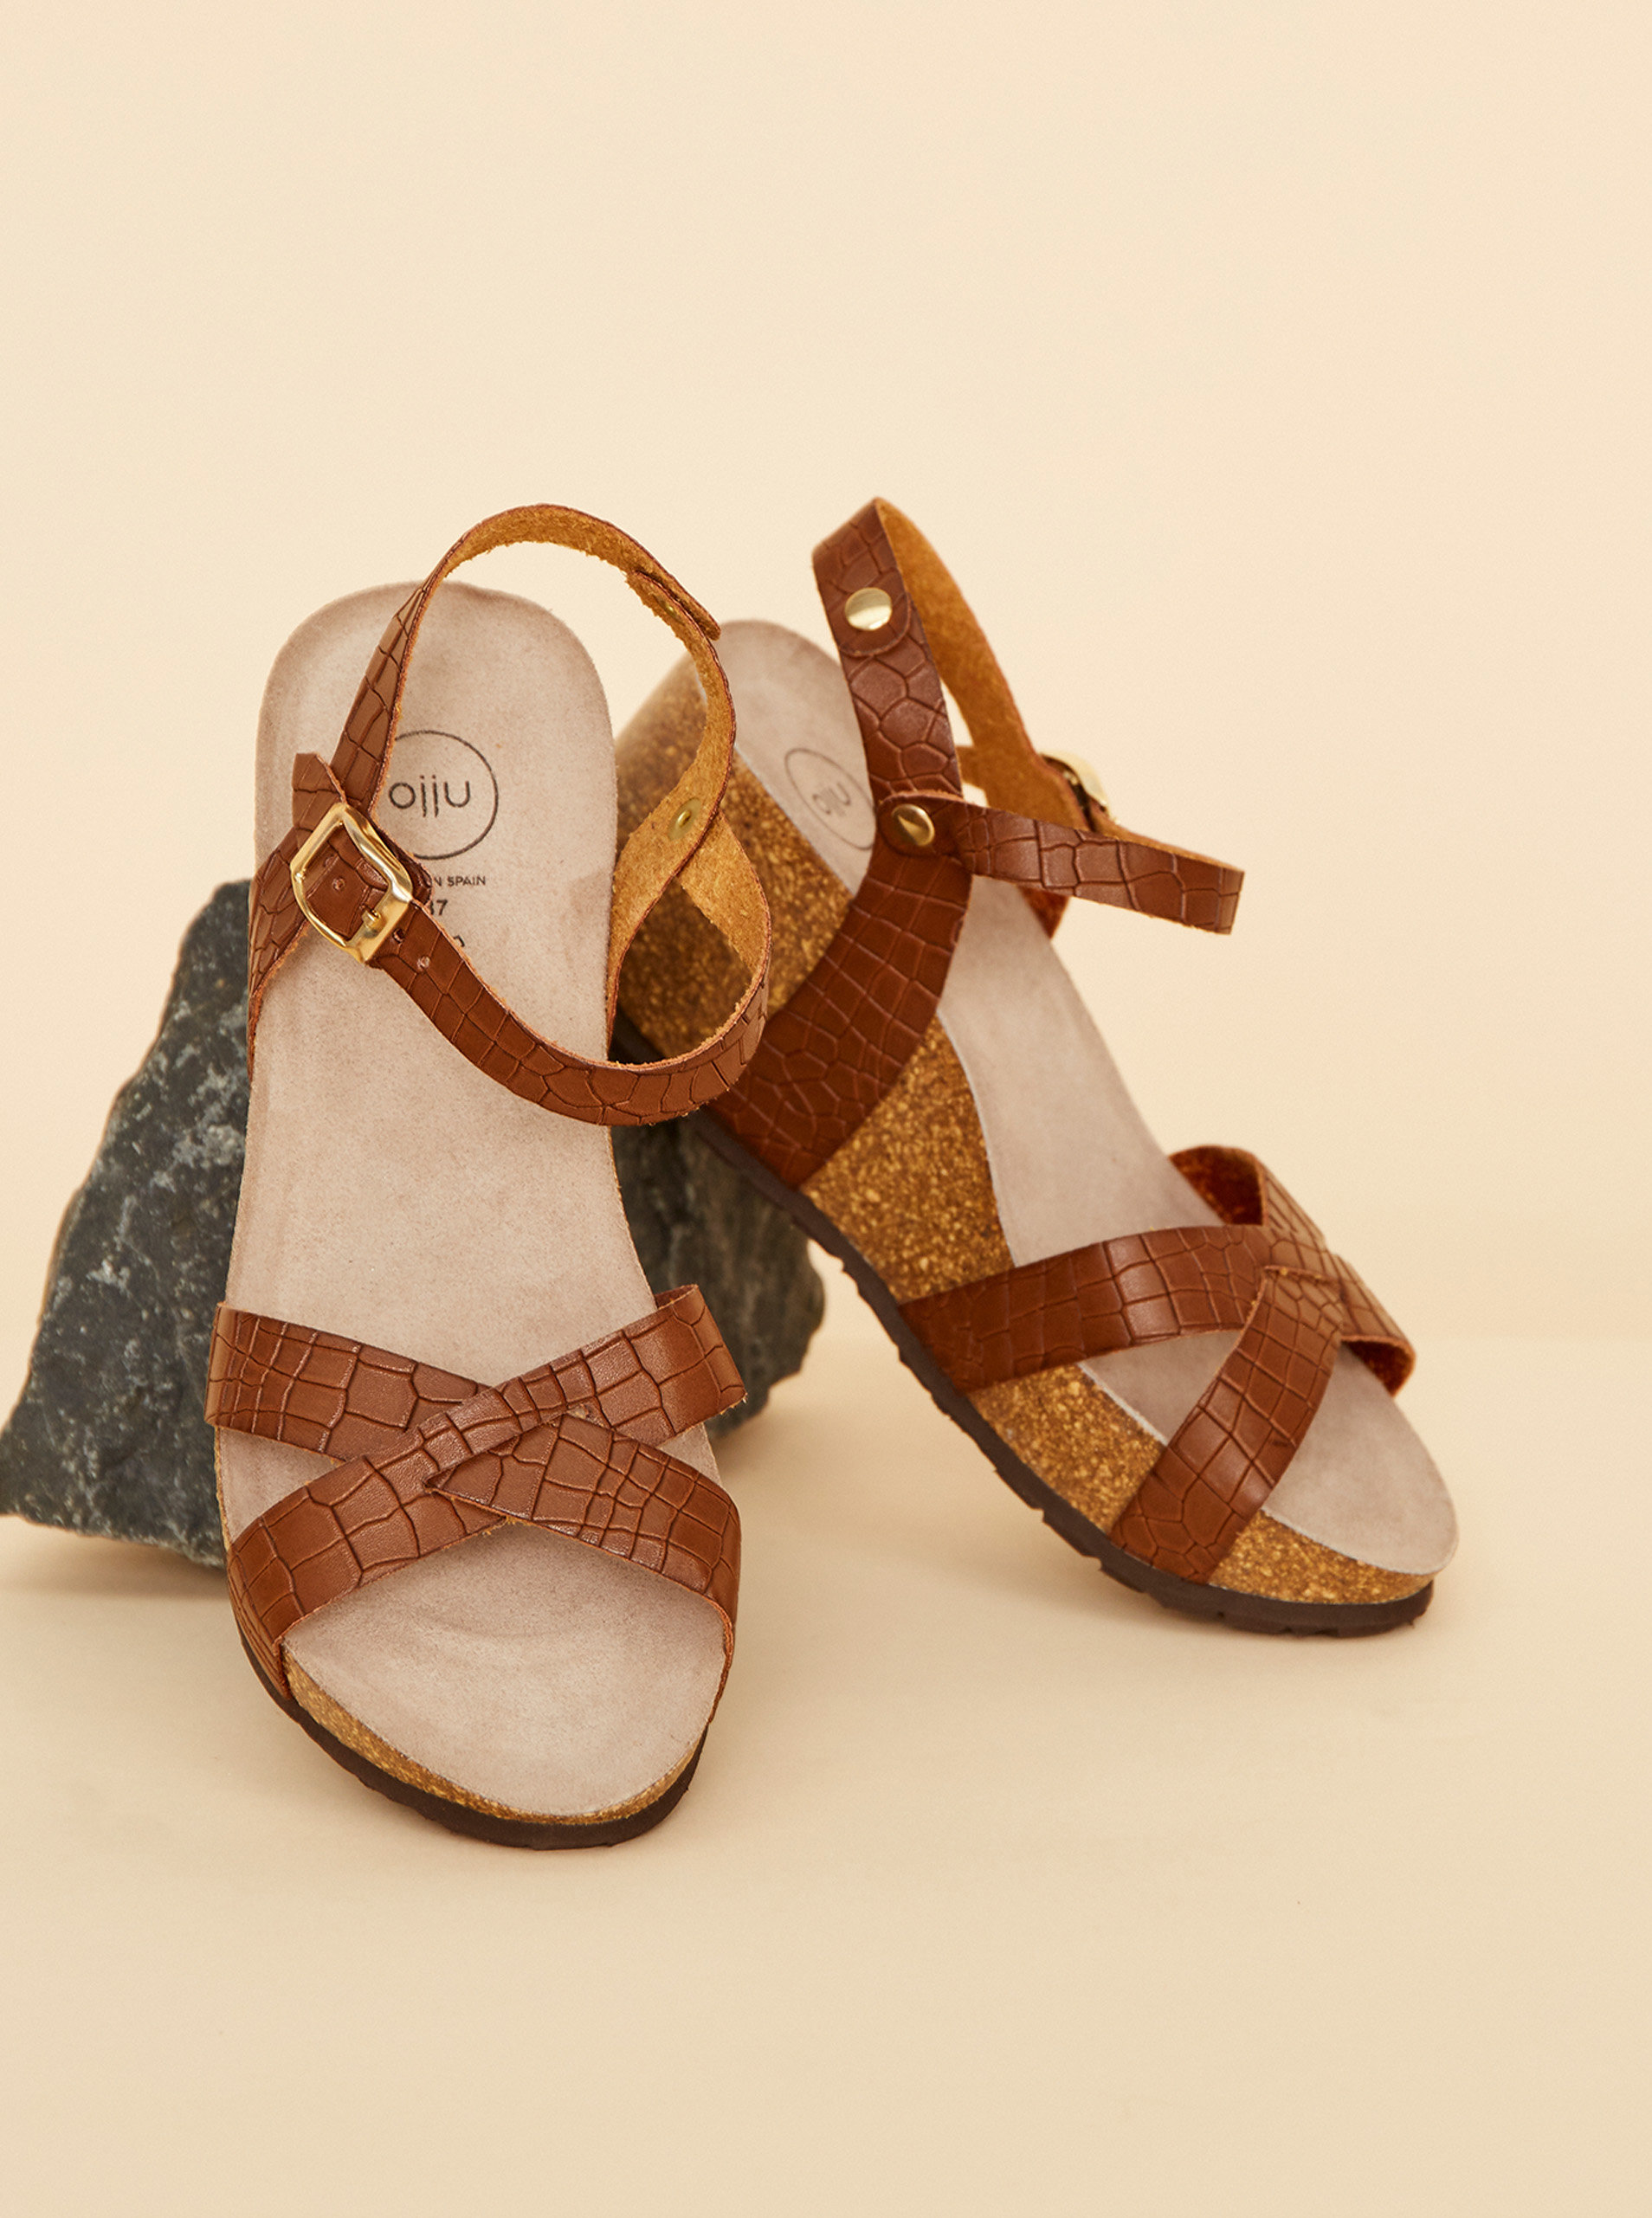 Fotografie Hnědé dámské kožené vzorované sandálky na klínku OJJU OJJU A22:1306503_252